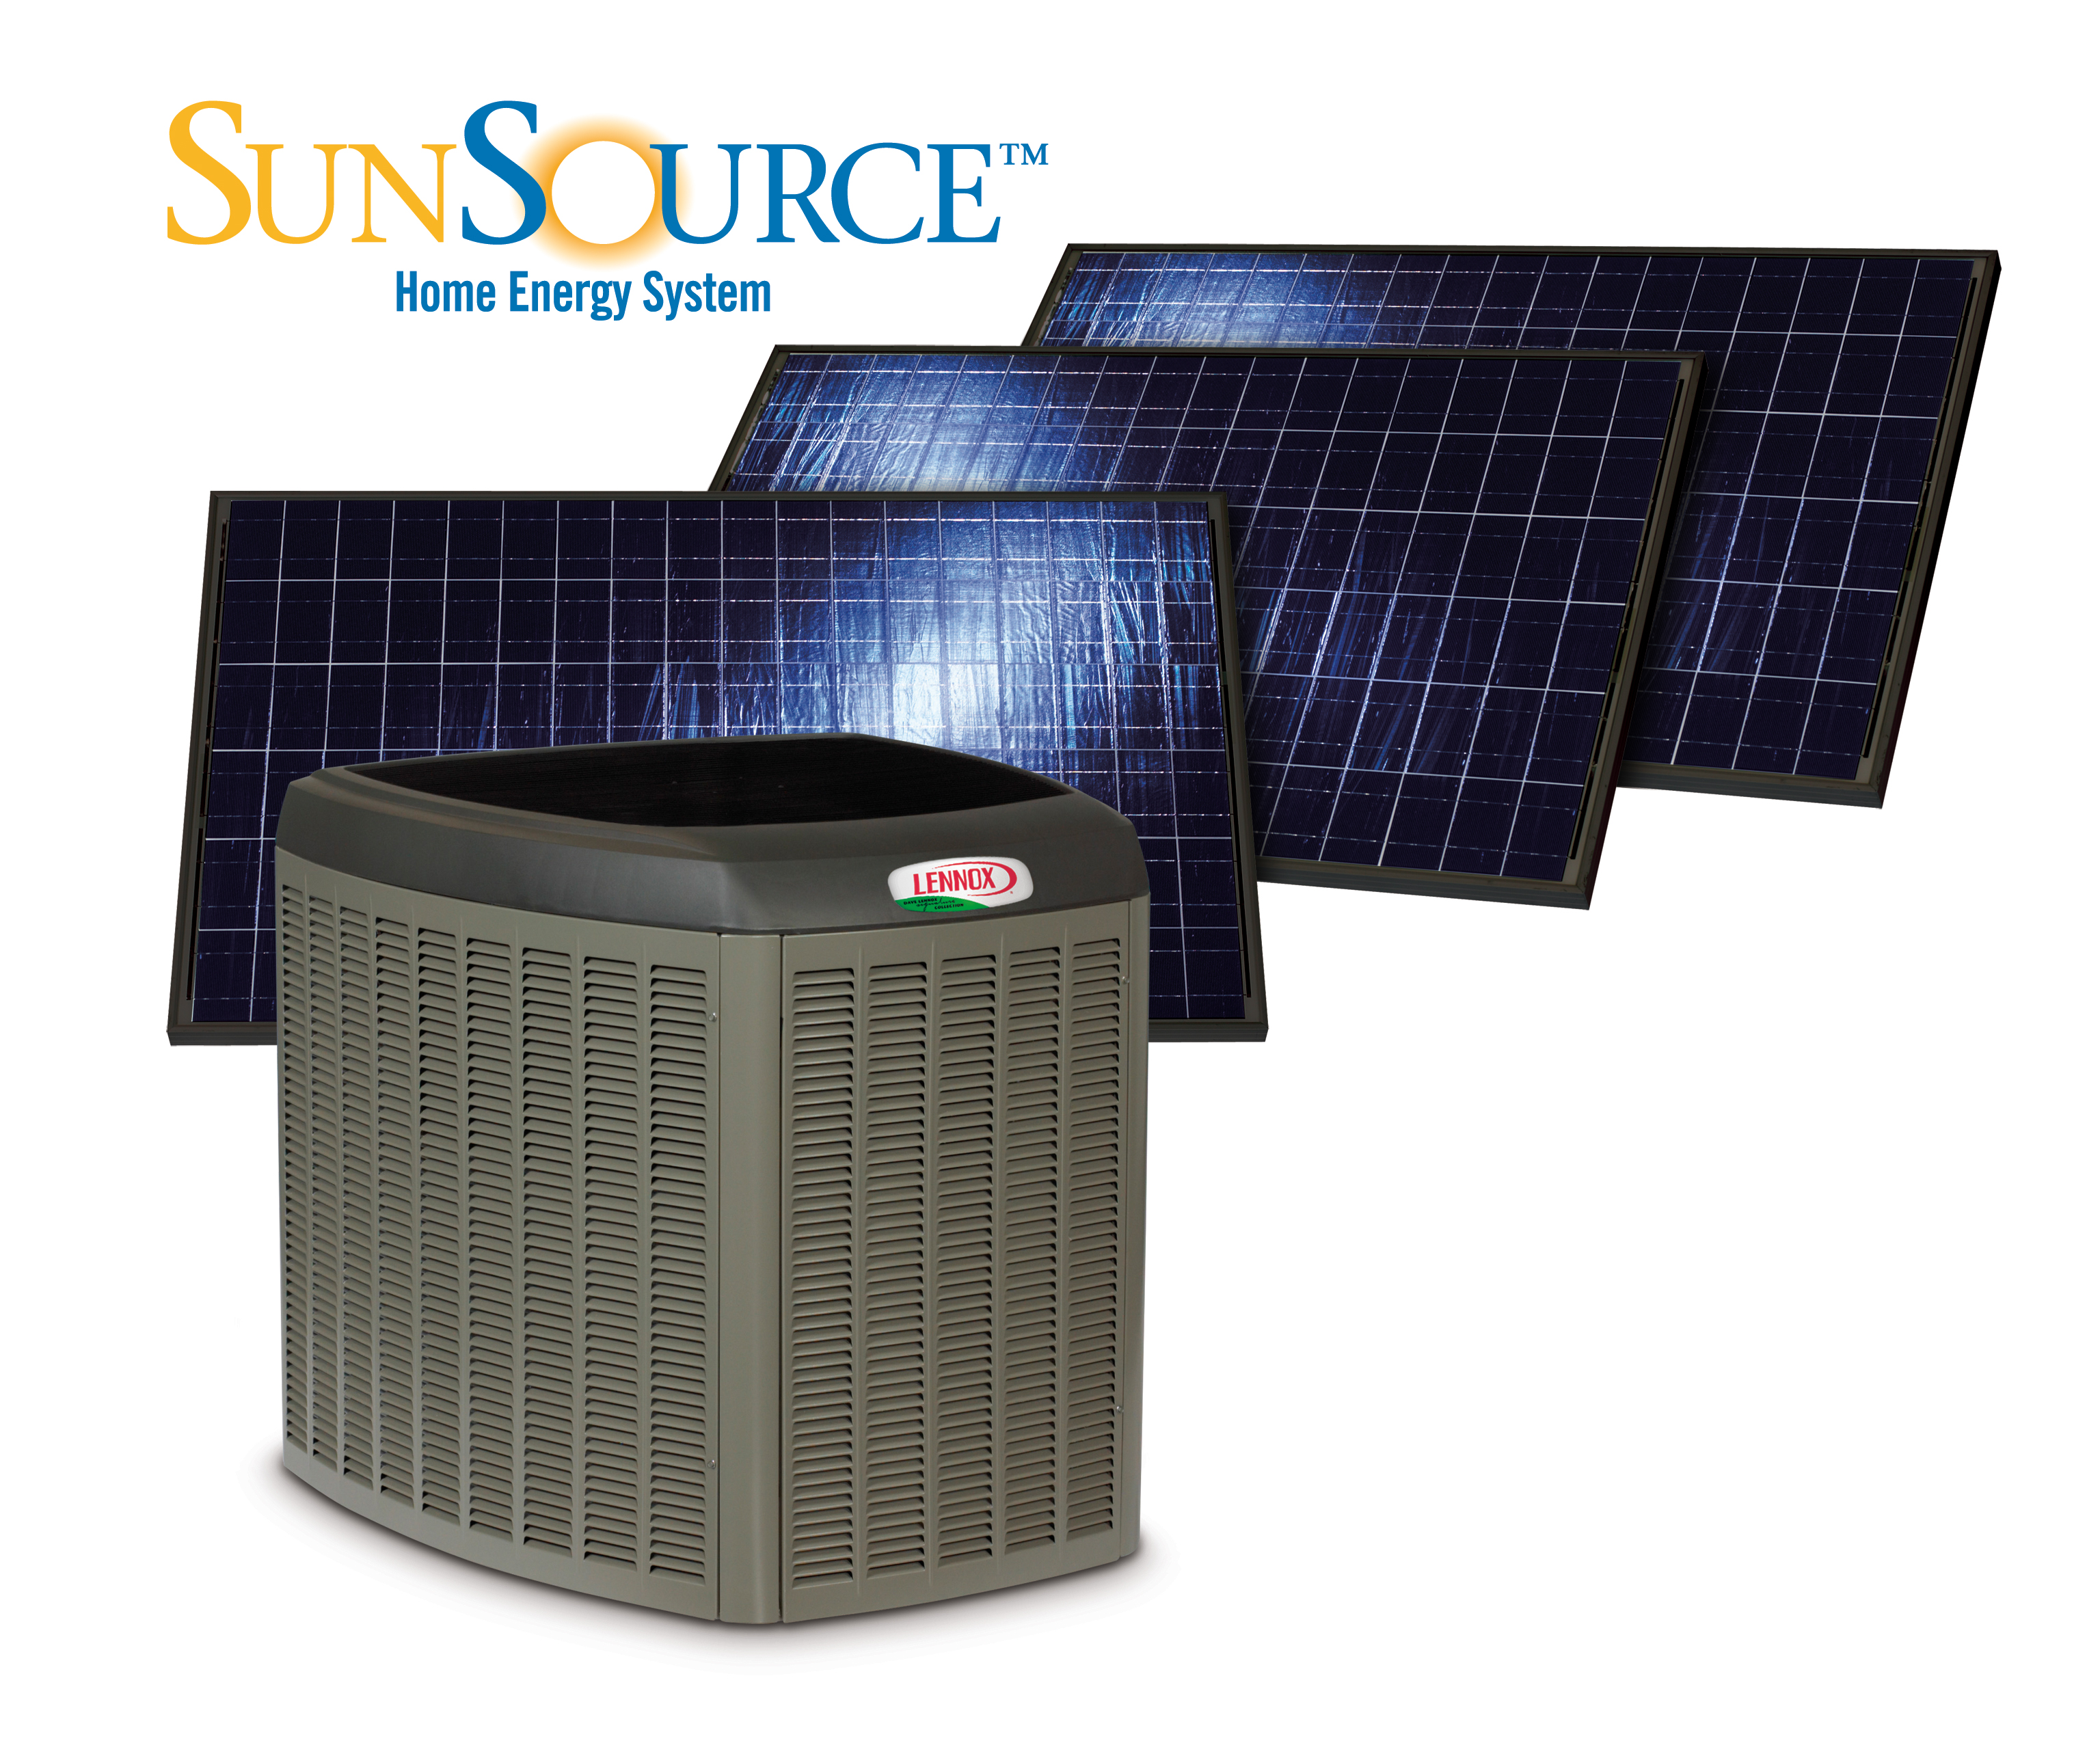 Lennox’s SunSource Home Energy System